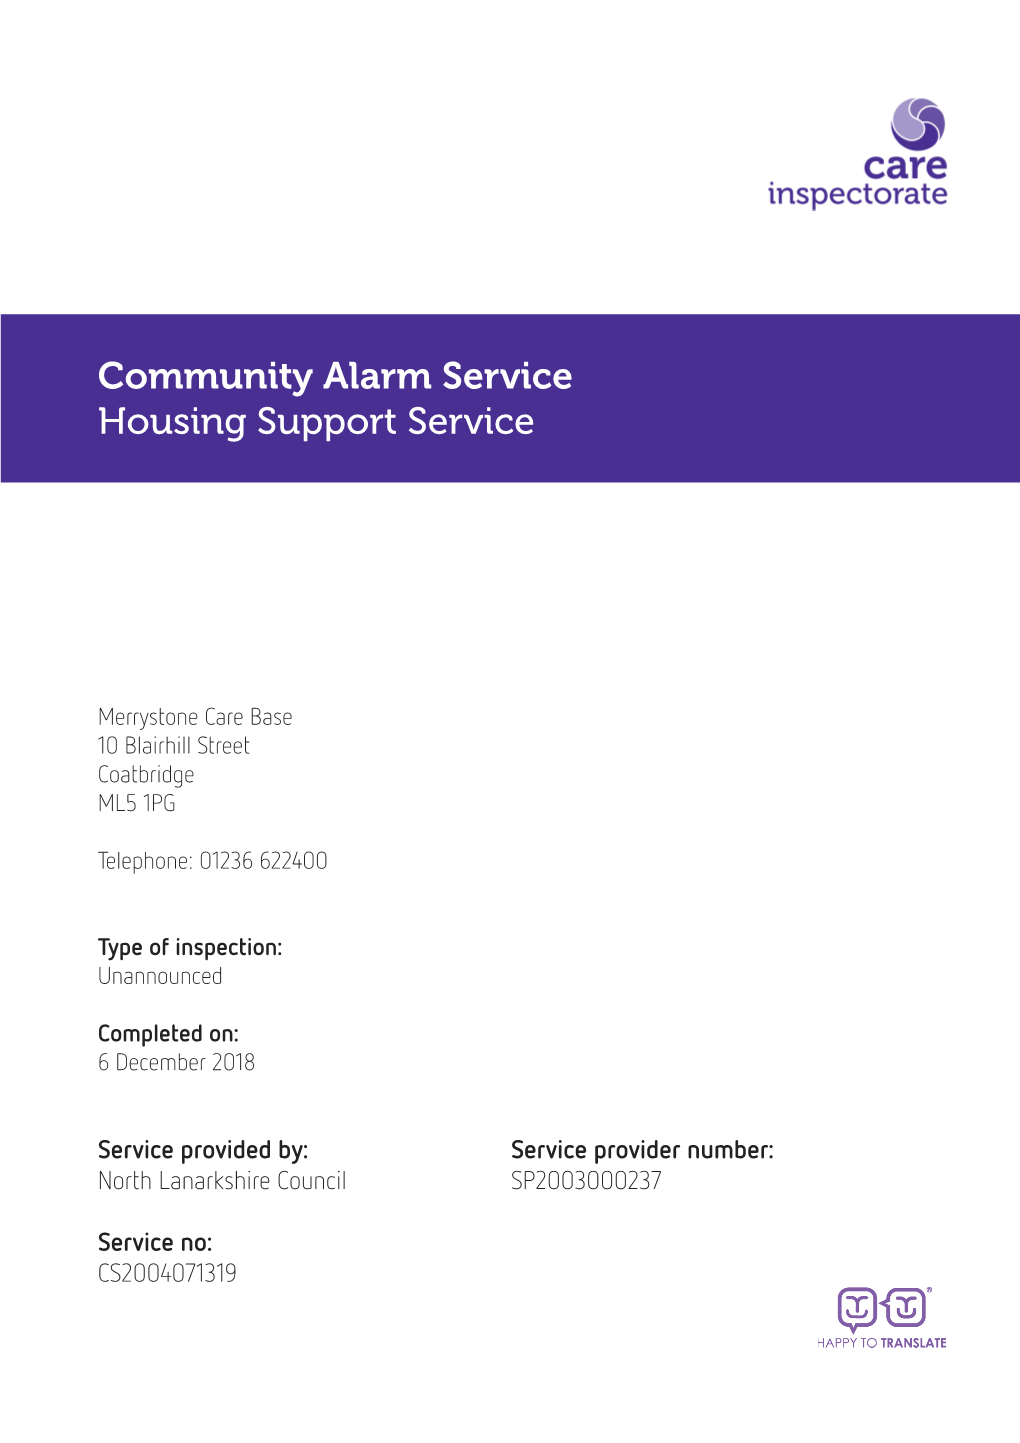 Community Alarm Service Housing Support Service